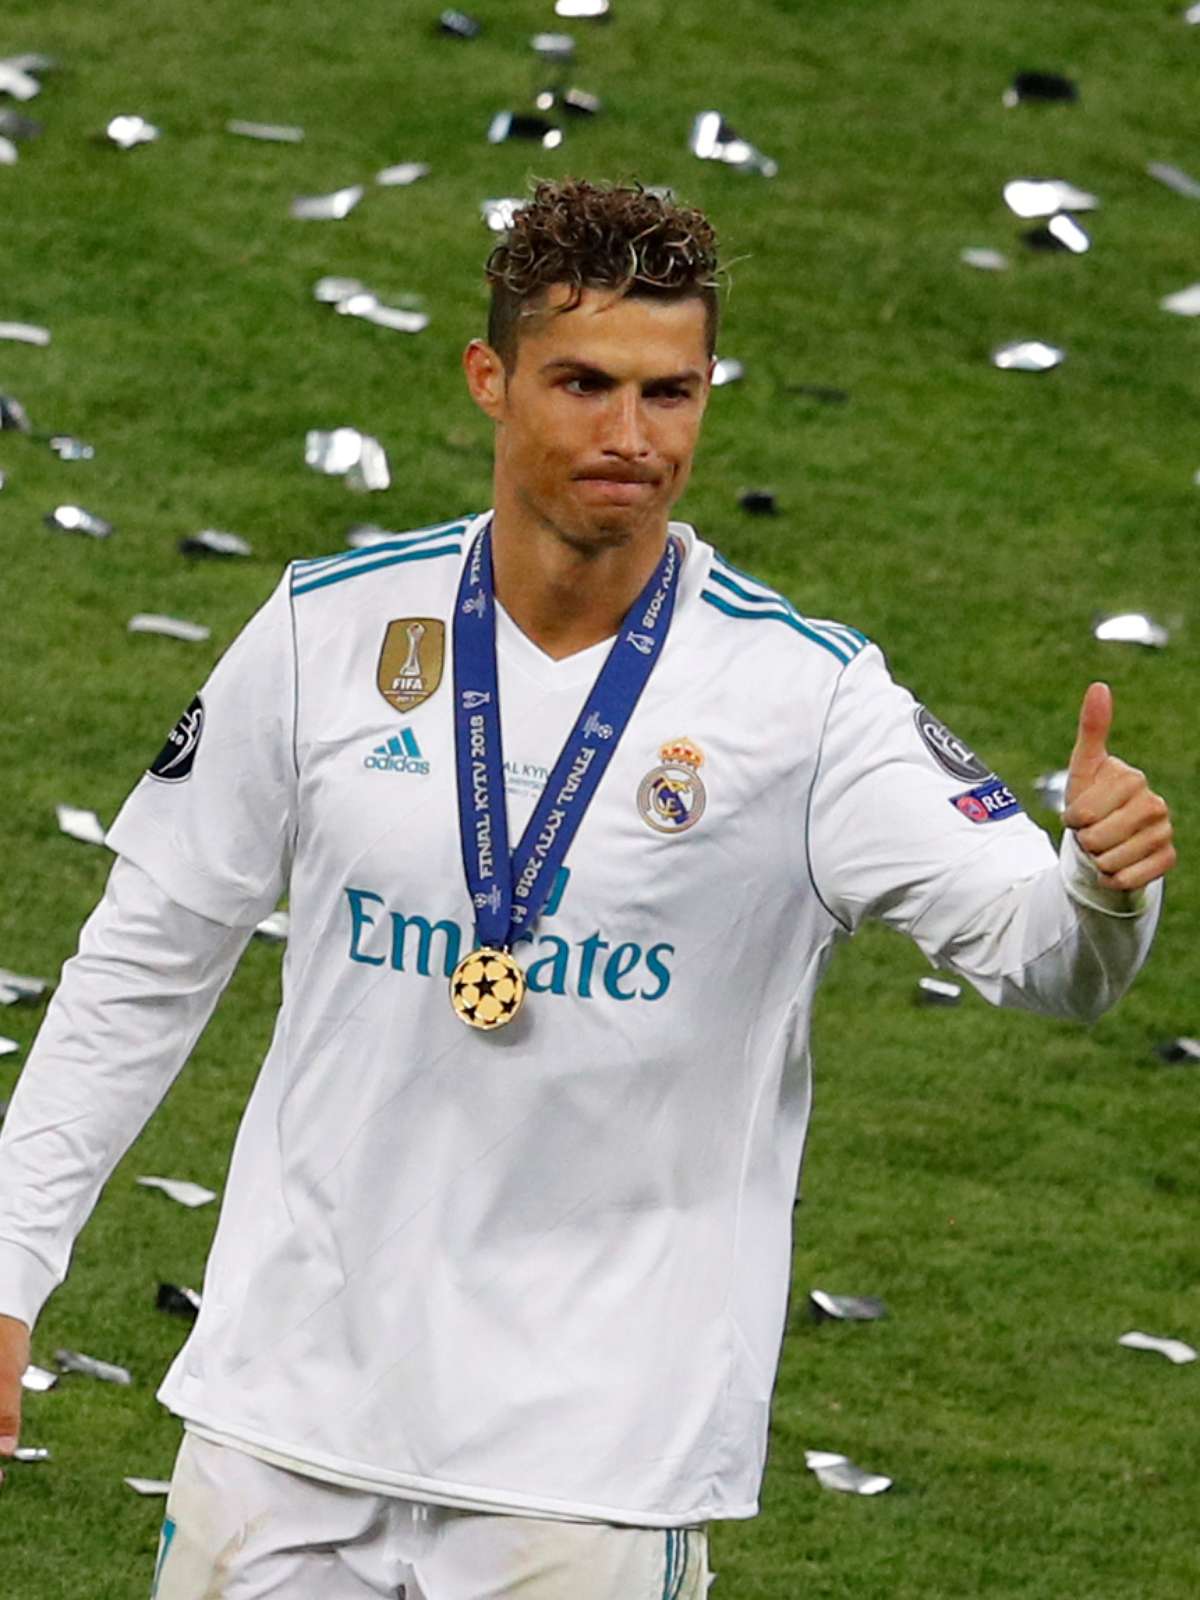 Lista de títulos do Mundial de Clubes: Real Madrid amplia liderança; veja  ranking de campeões, mundial de clubes